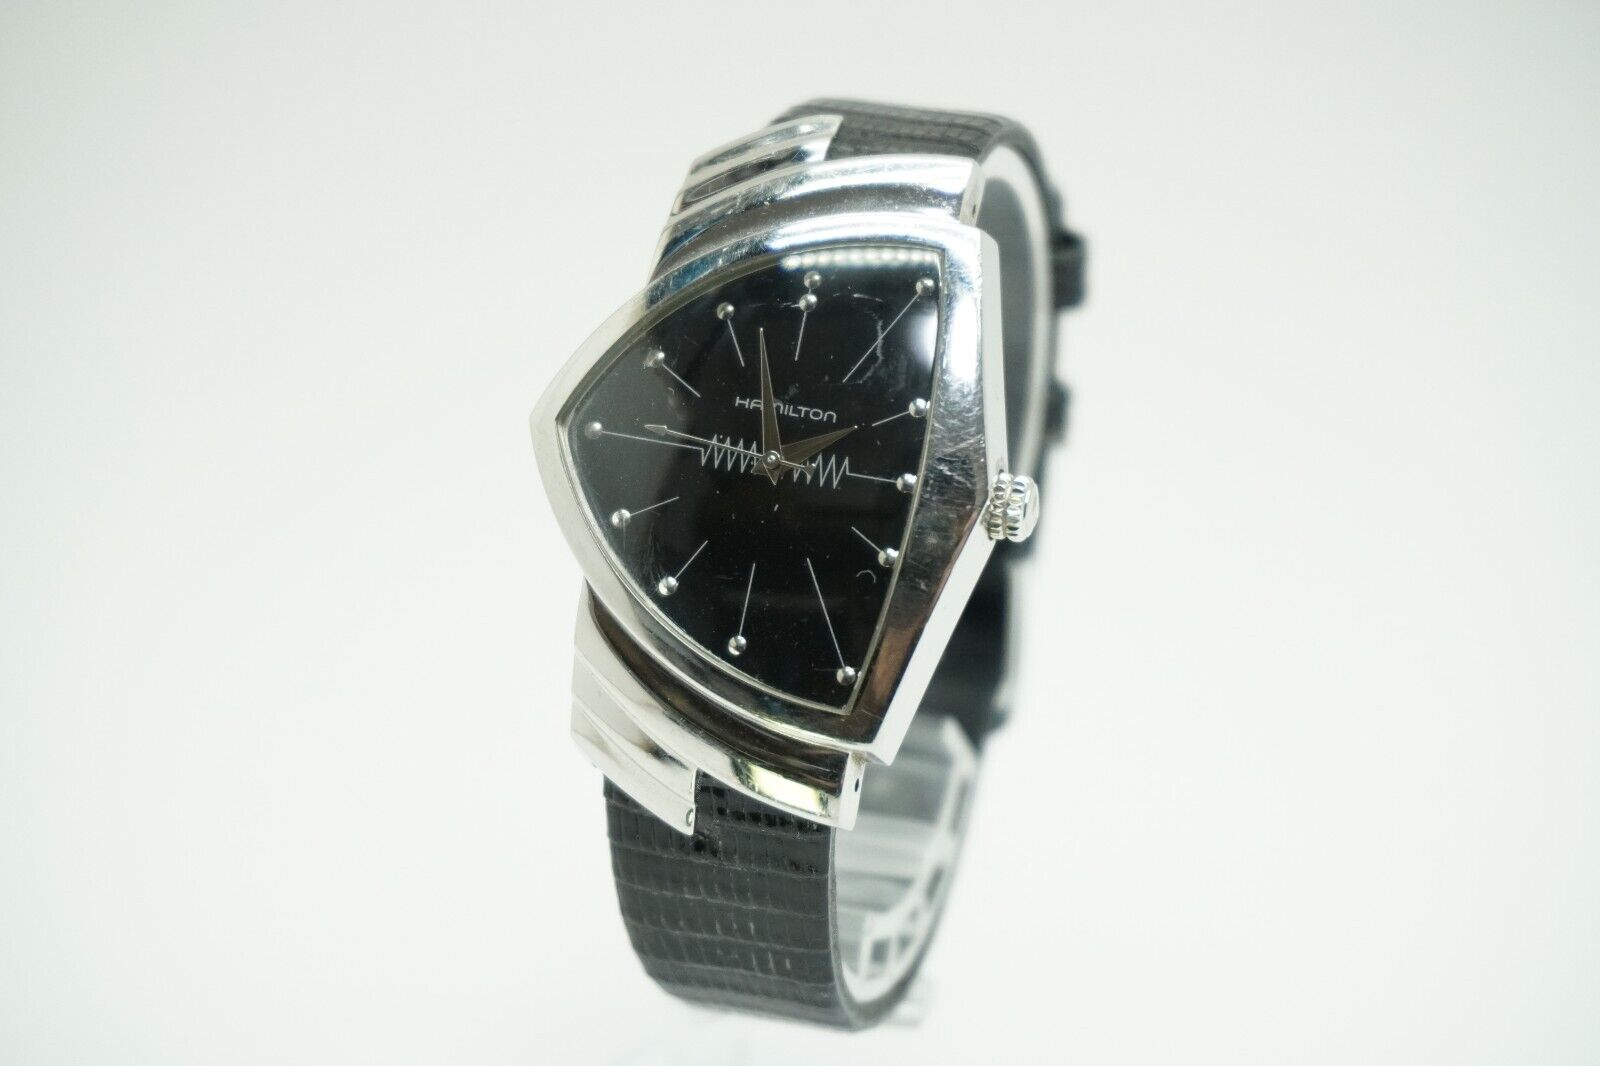 HAMILTON VENTURA H244110 Quartz Watch Black Silver very good 